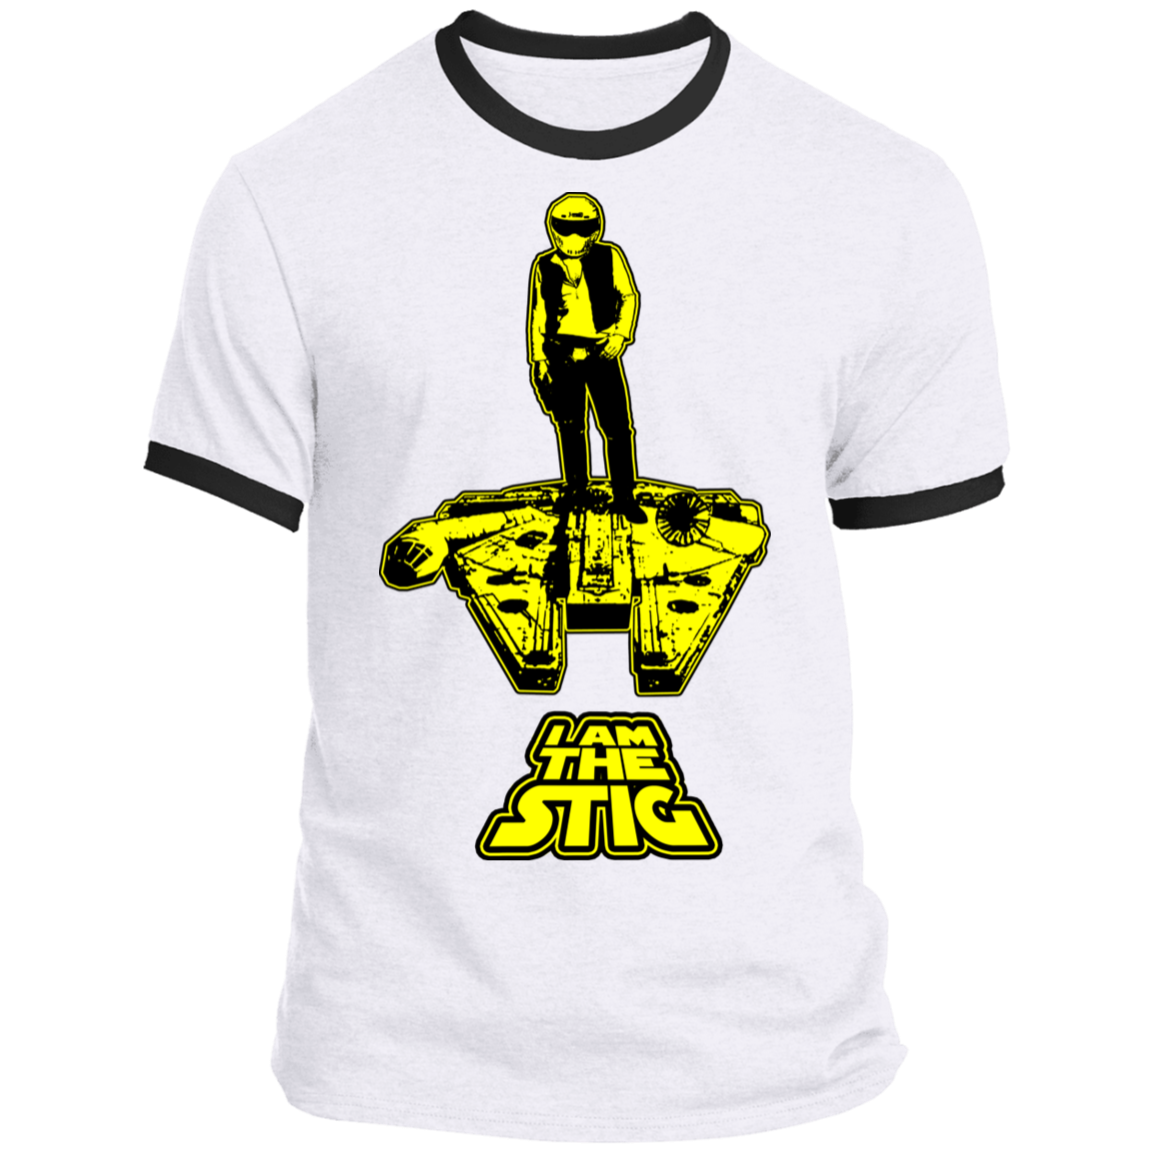 ArtichokeUSA Custom Design. I am the Stig. Han Solo / The Stig Fan Art. Ringer Tee